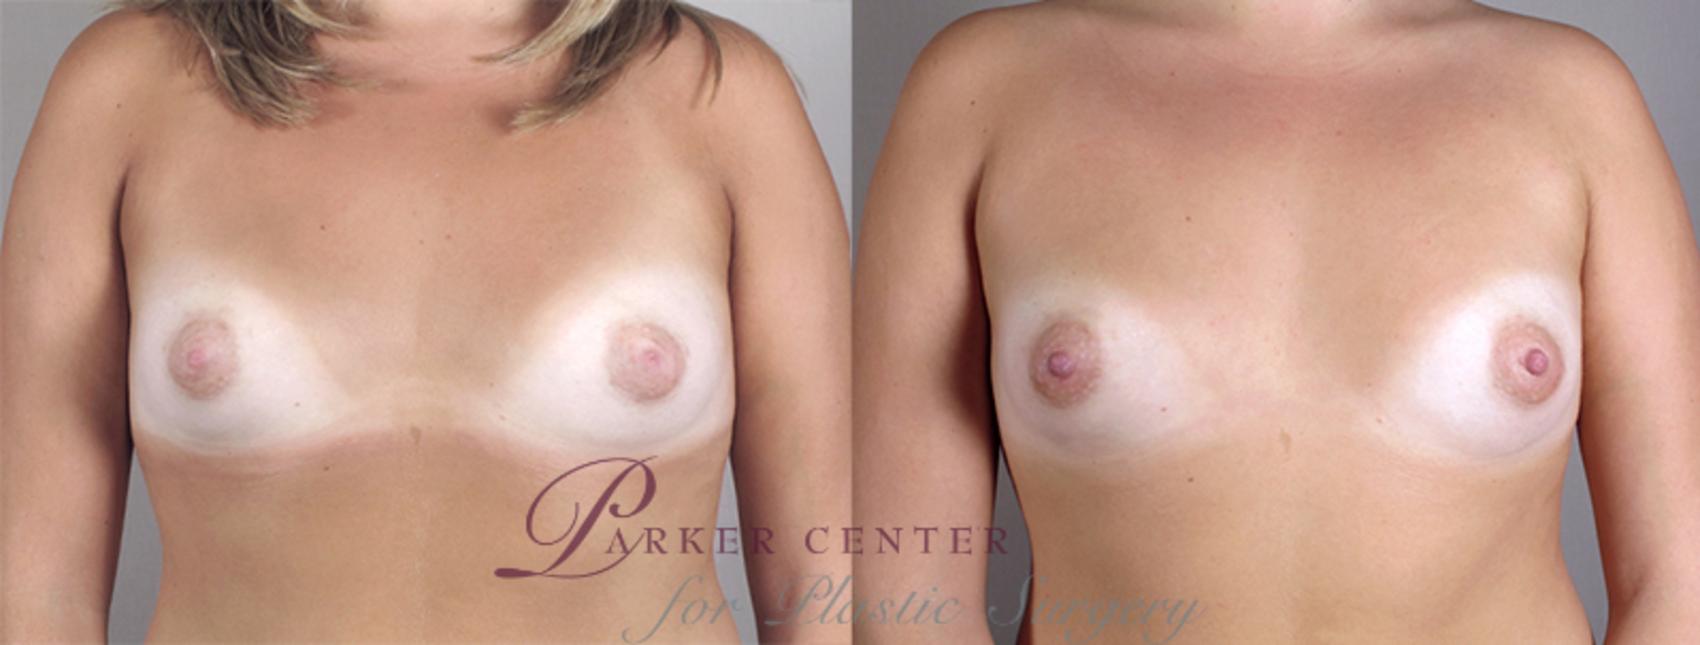 Nipple Procedures Case 560 Before & After View #1 | Paramus, NJ | Parker Center for Plastic Surgery